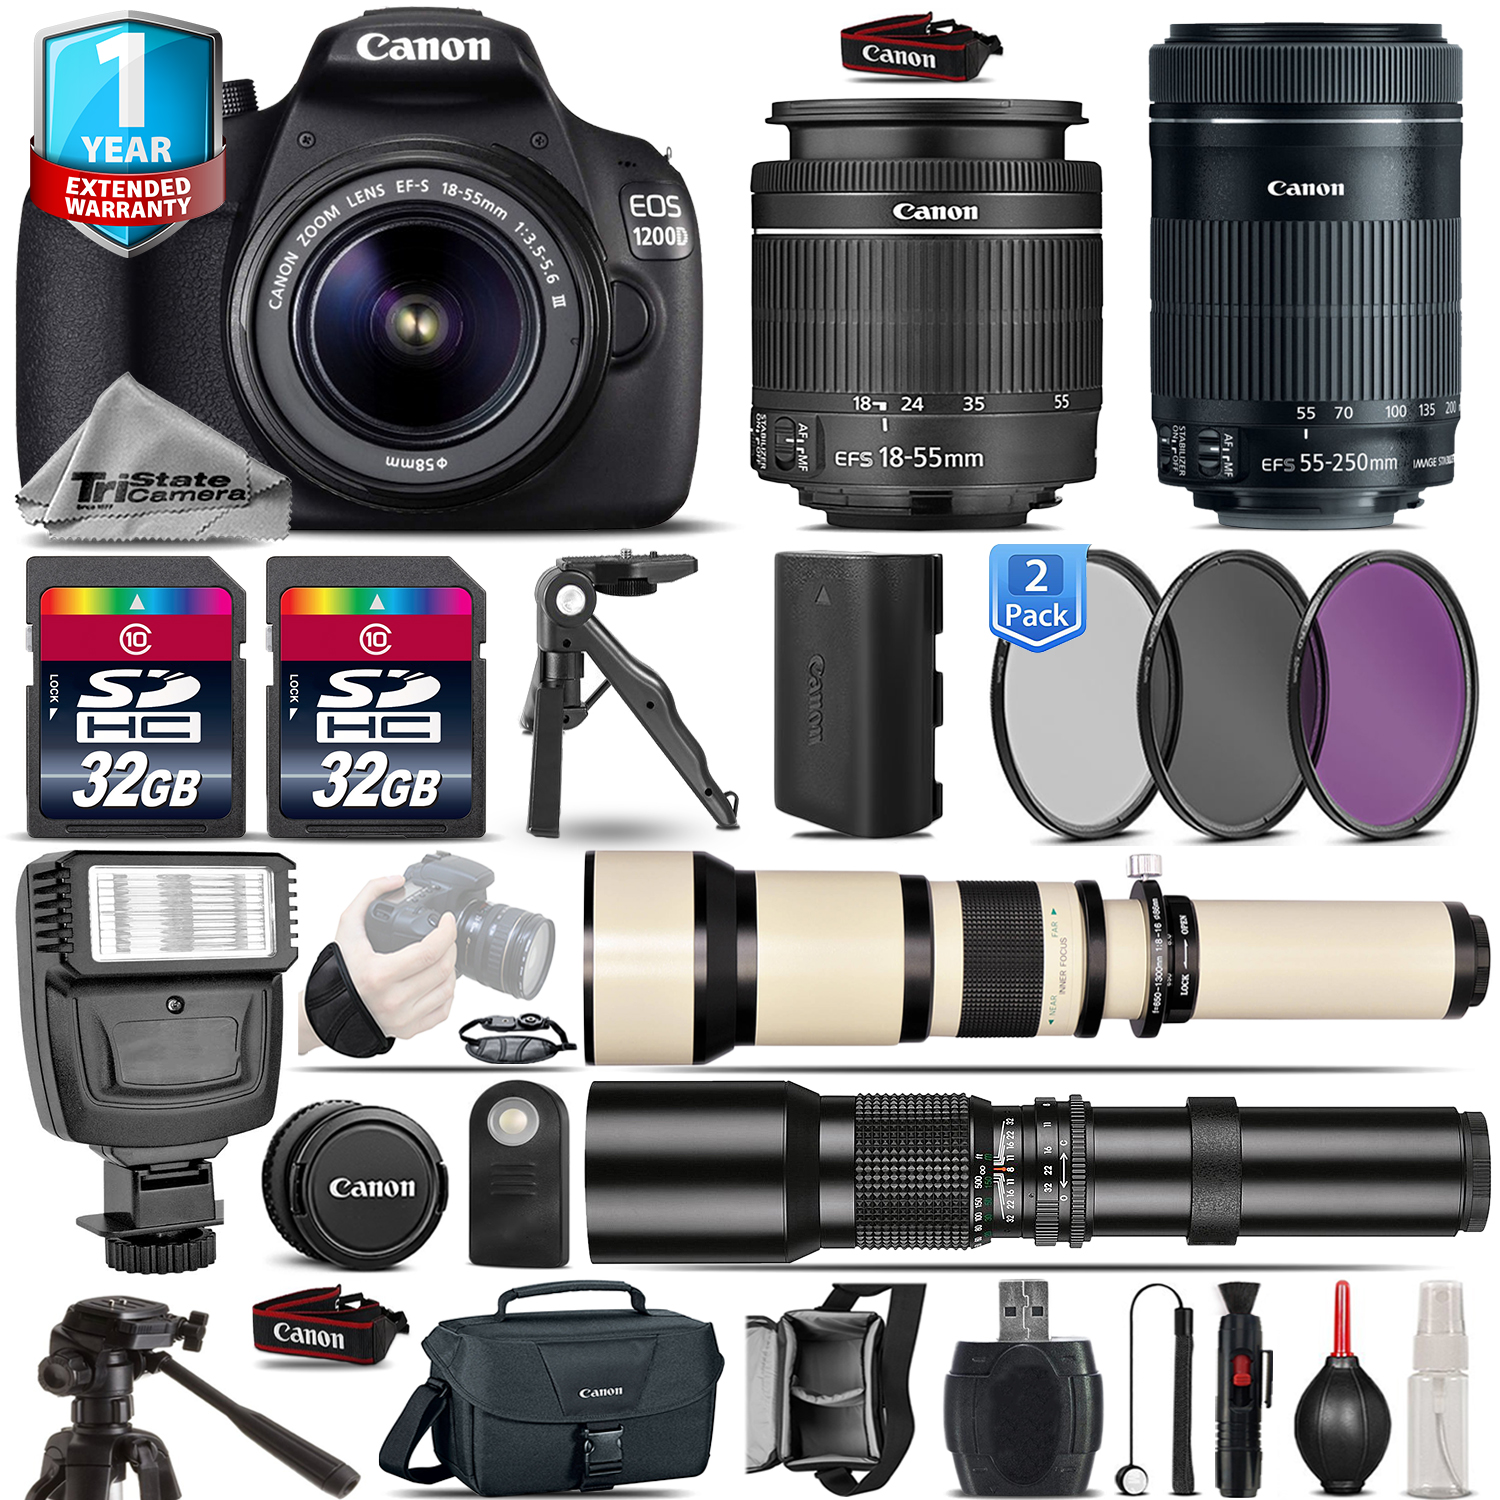 EOS Rebel 1200D Camera + 18-55mm + 55-200mm IS + 1yr Warranty - 64GB Kit *FREE SHIPPING*